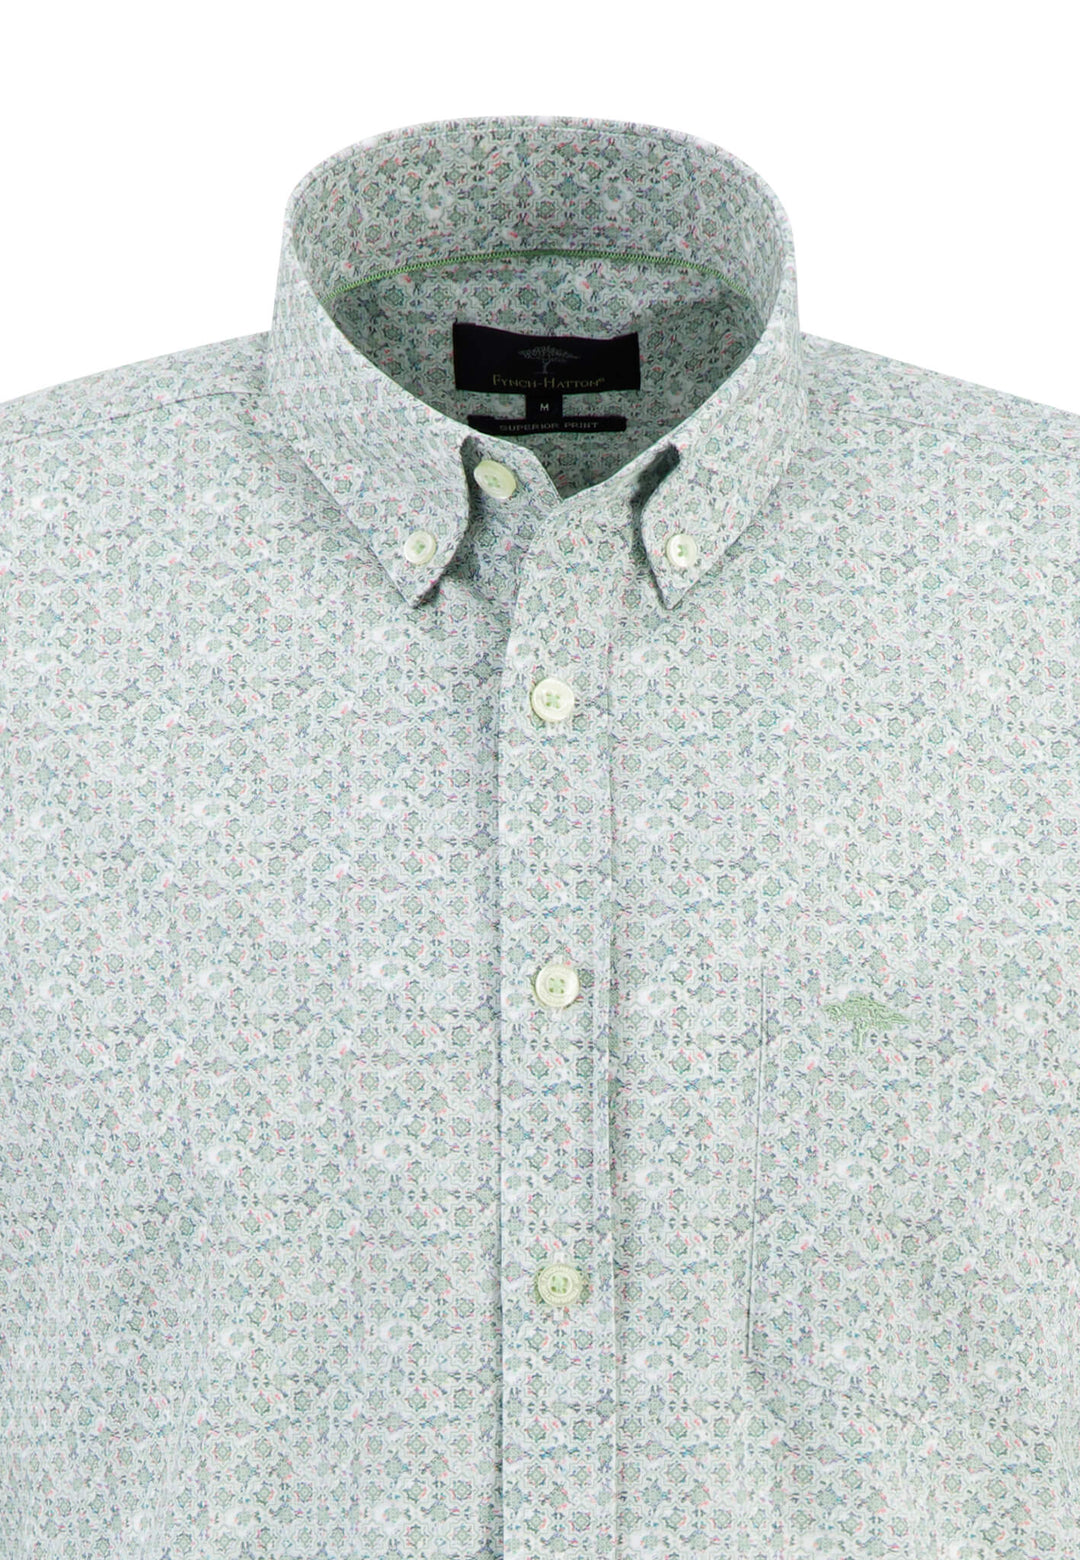 Superior Print Cotton – FYNCH-HATTON Offizieller Shirt | Shop Online